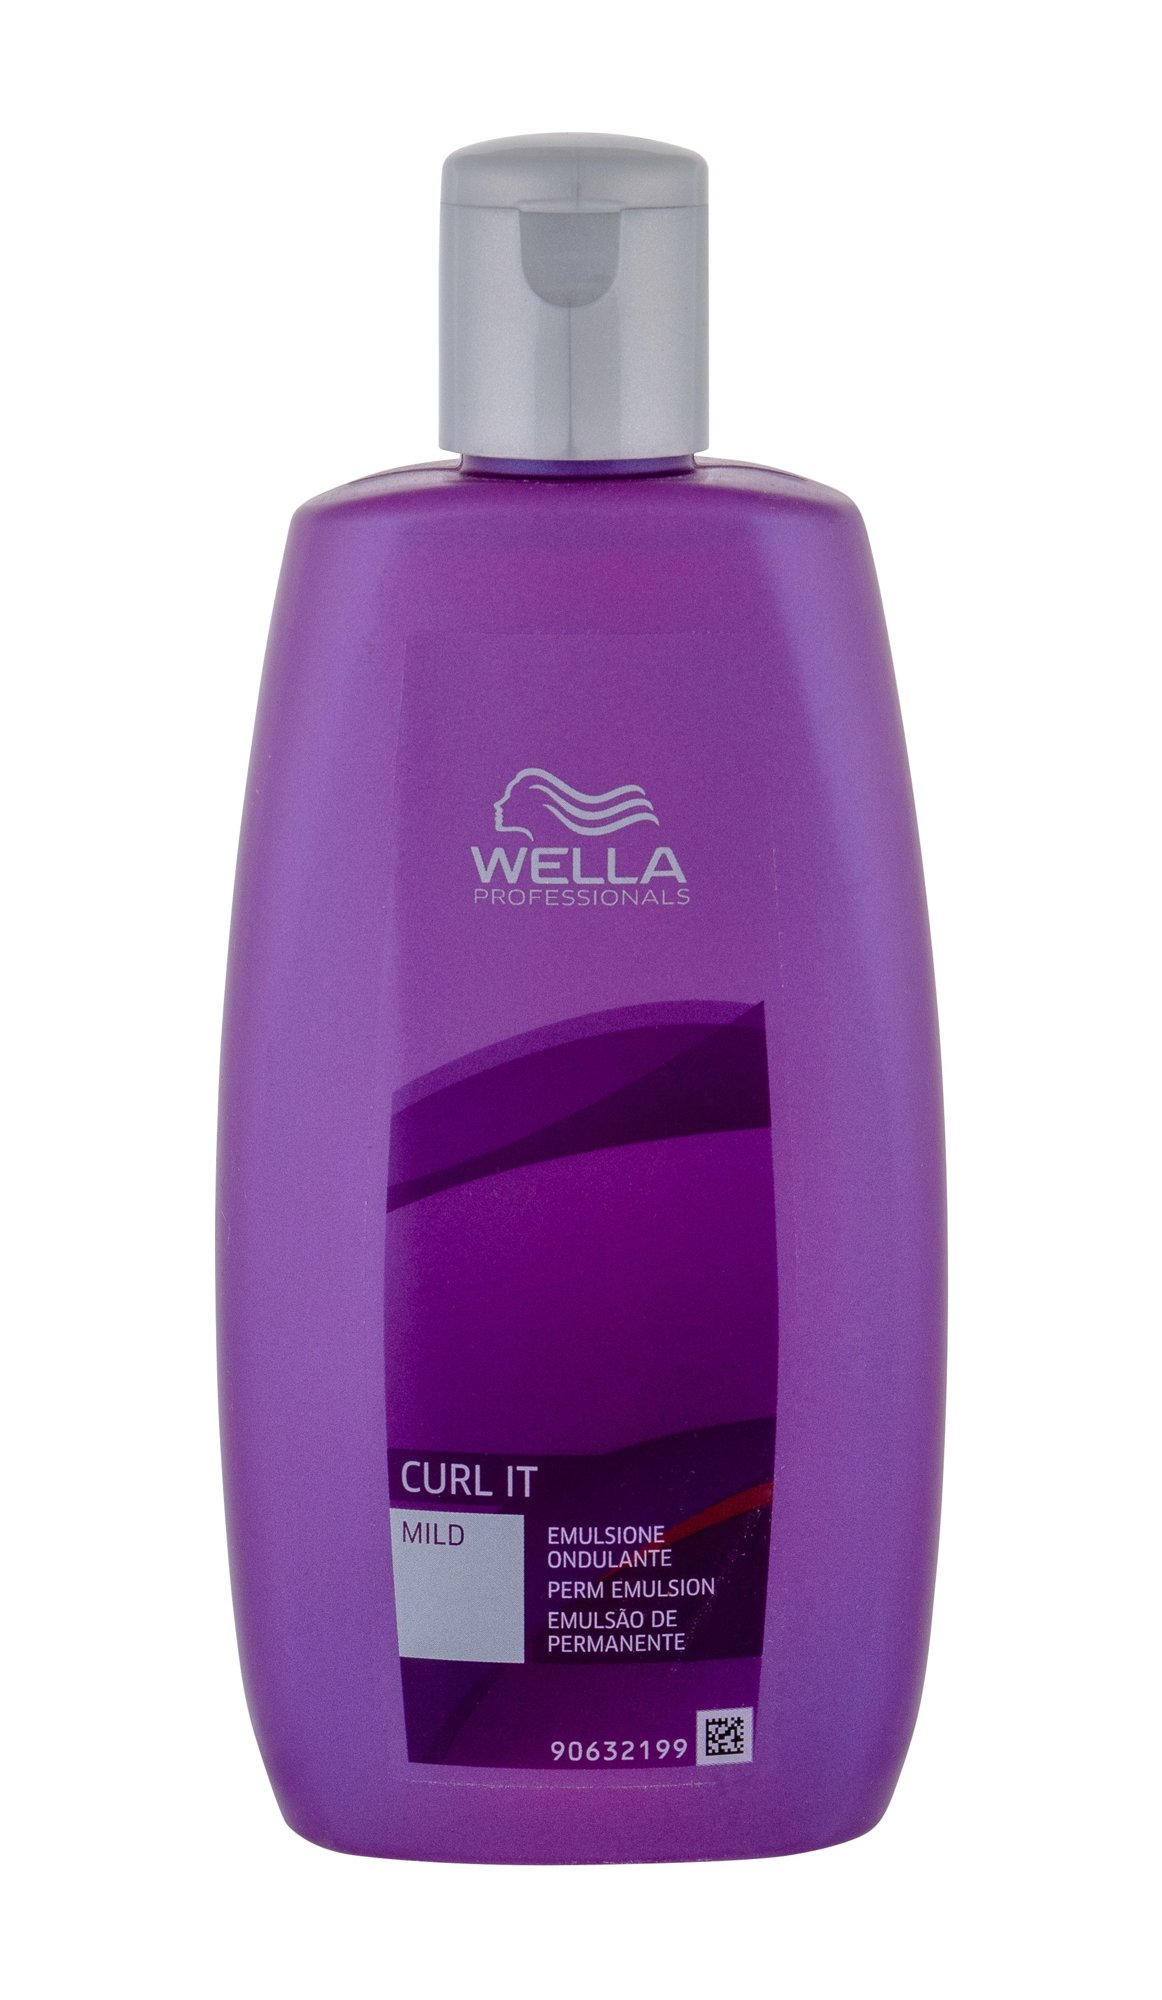 Wella Curl It Mild Emulsion garbanų formavimo priemonė